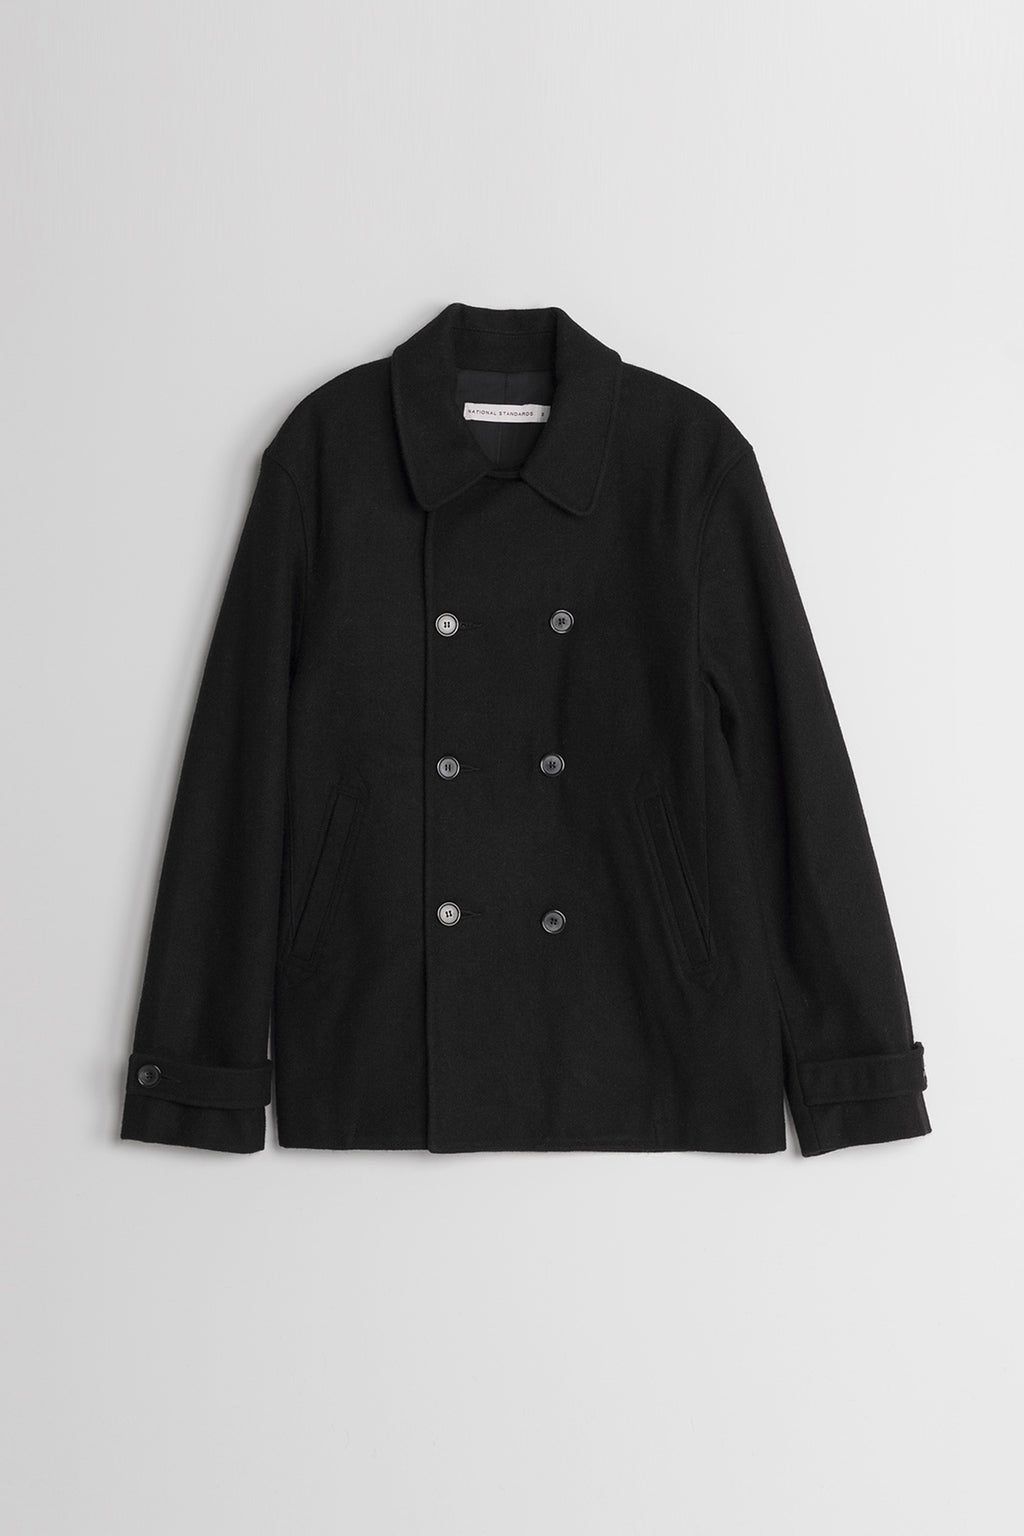 Japanese Loden Pea Coat in Black